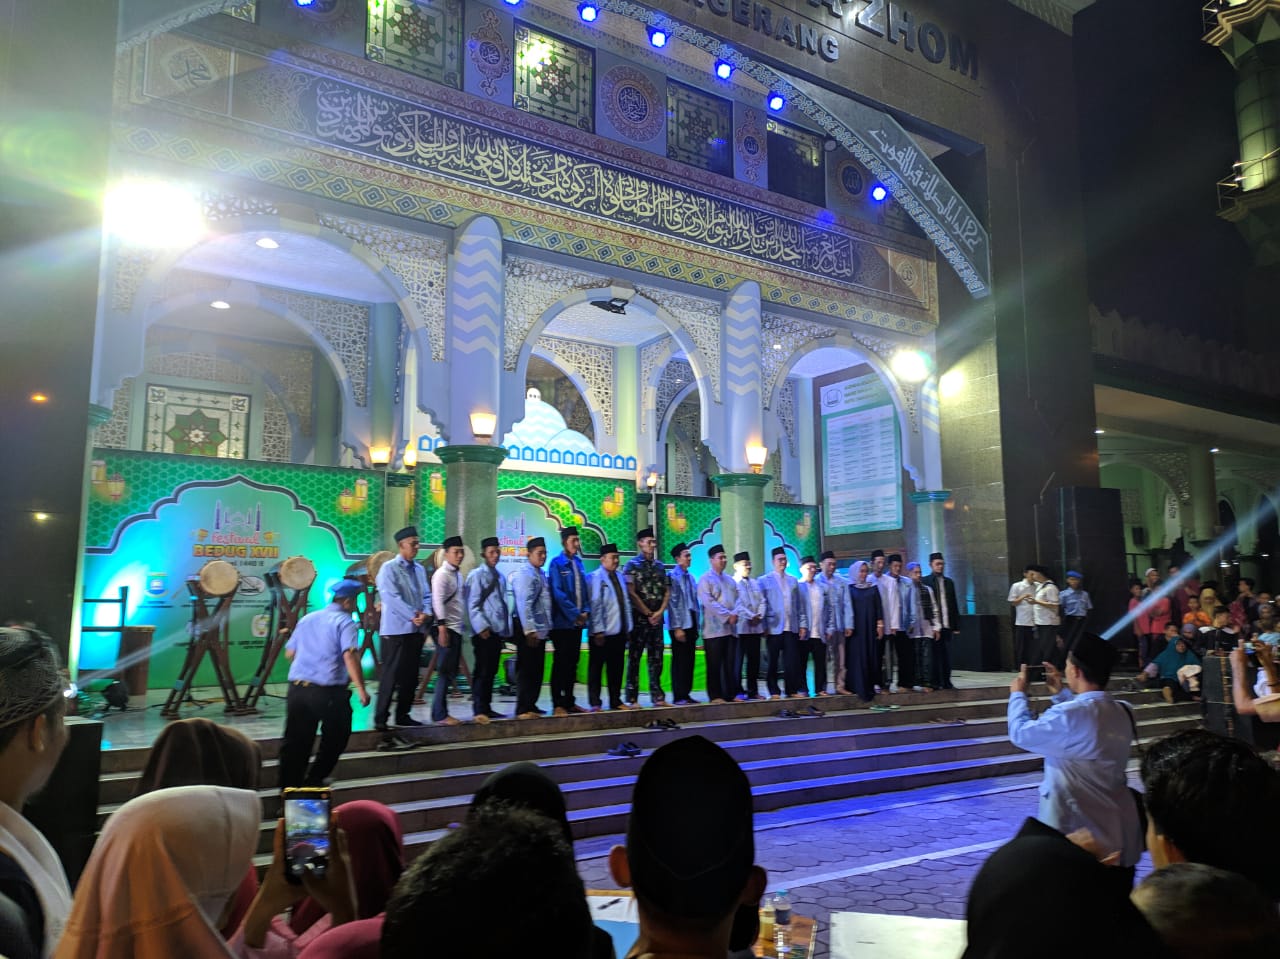 Suasana kegiatan Festival Bedug di Masjid Raya Al-Azhom, Kota Tangerang.